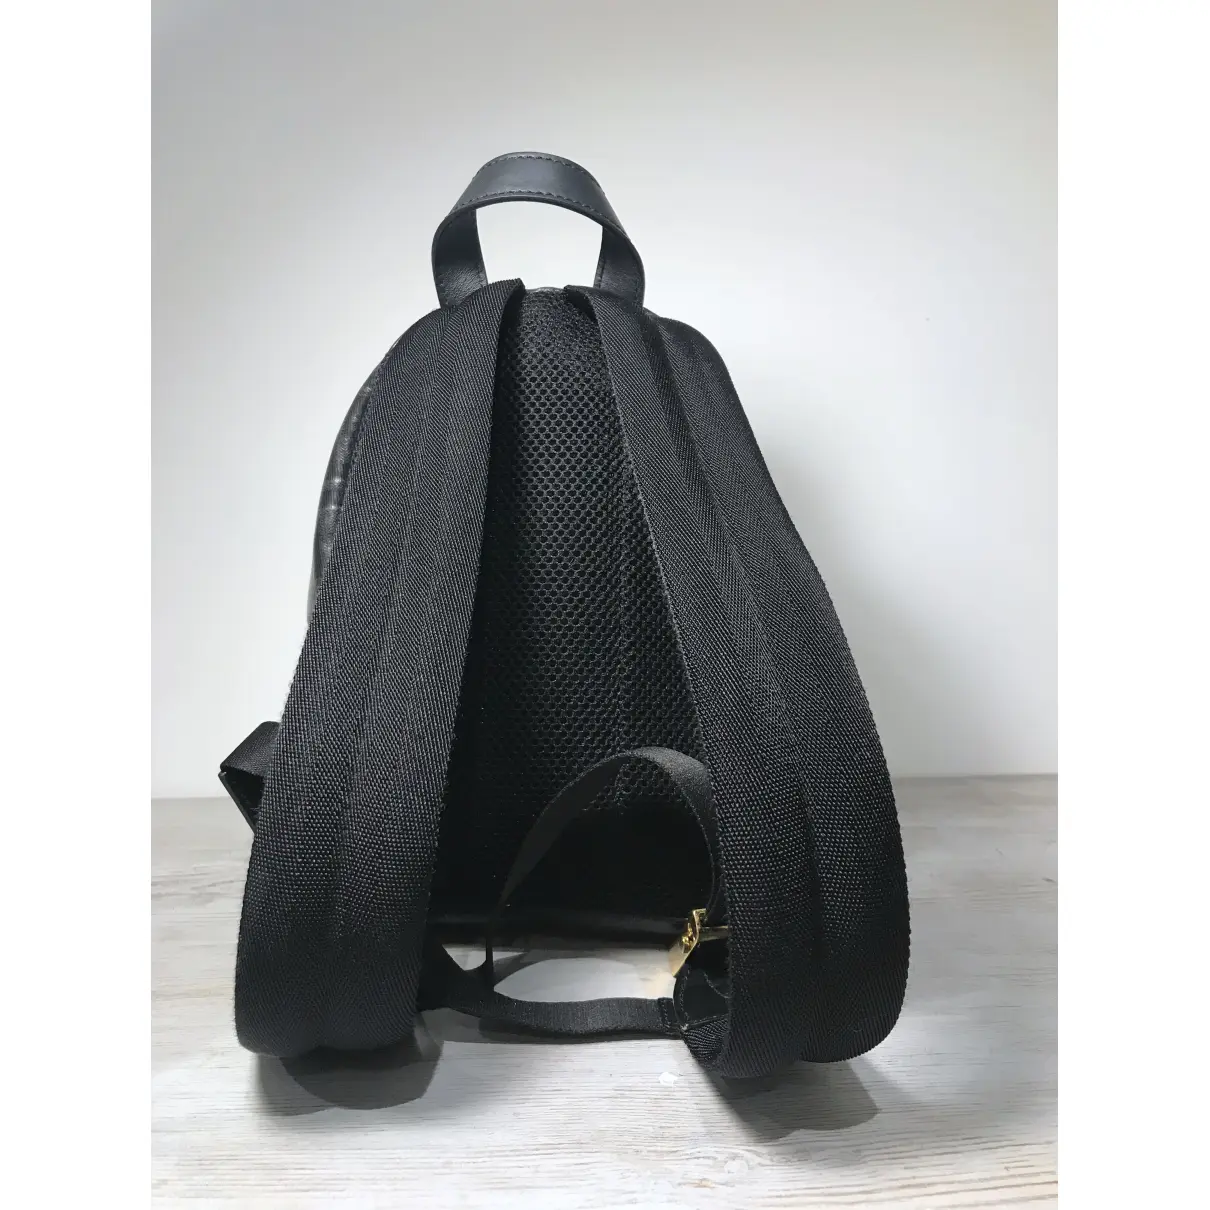 Buy Fendi x Fila Fendi Mania cloth backpack online